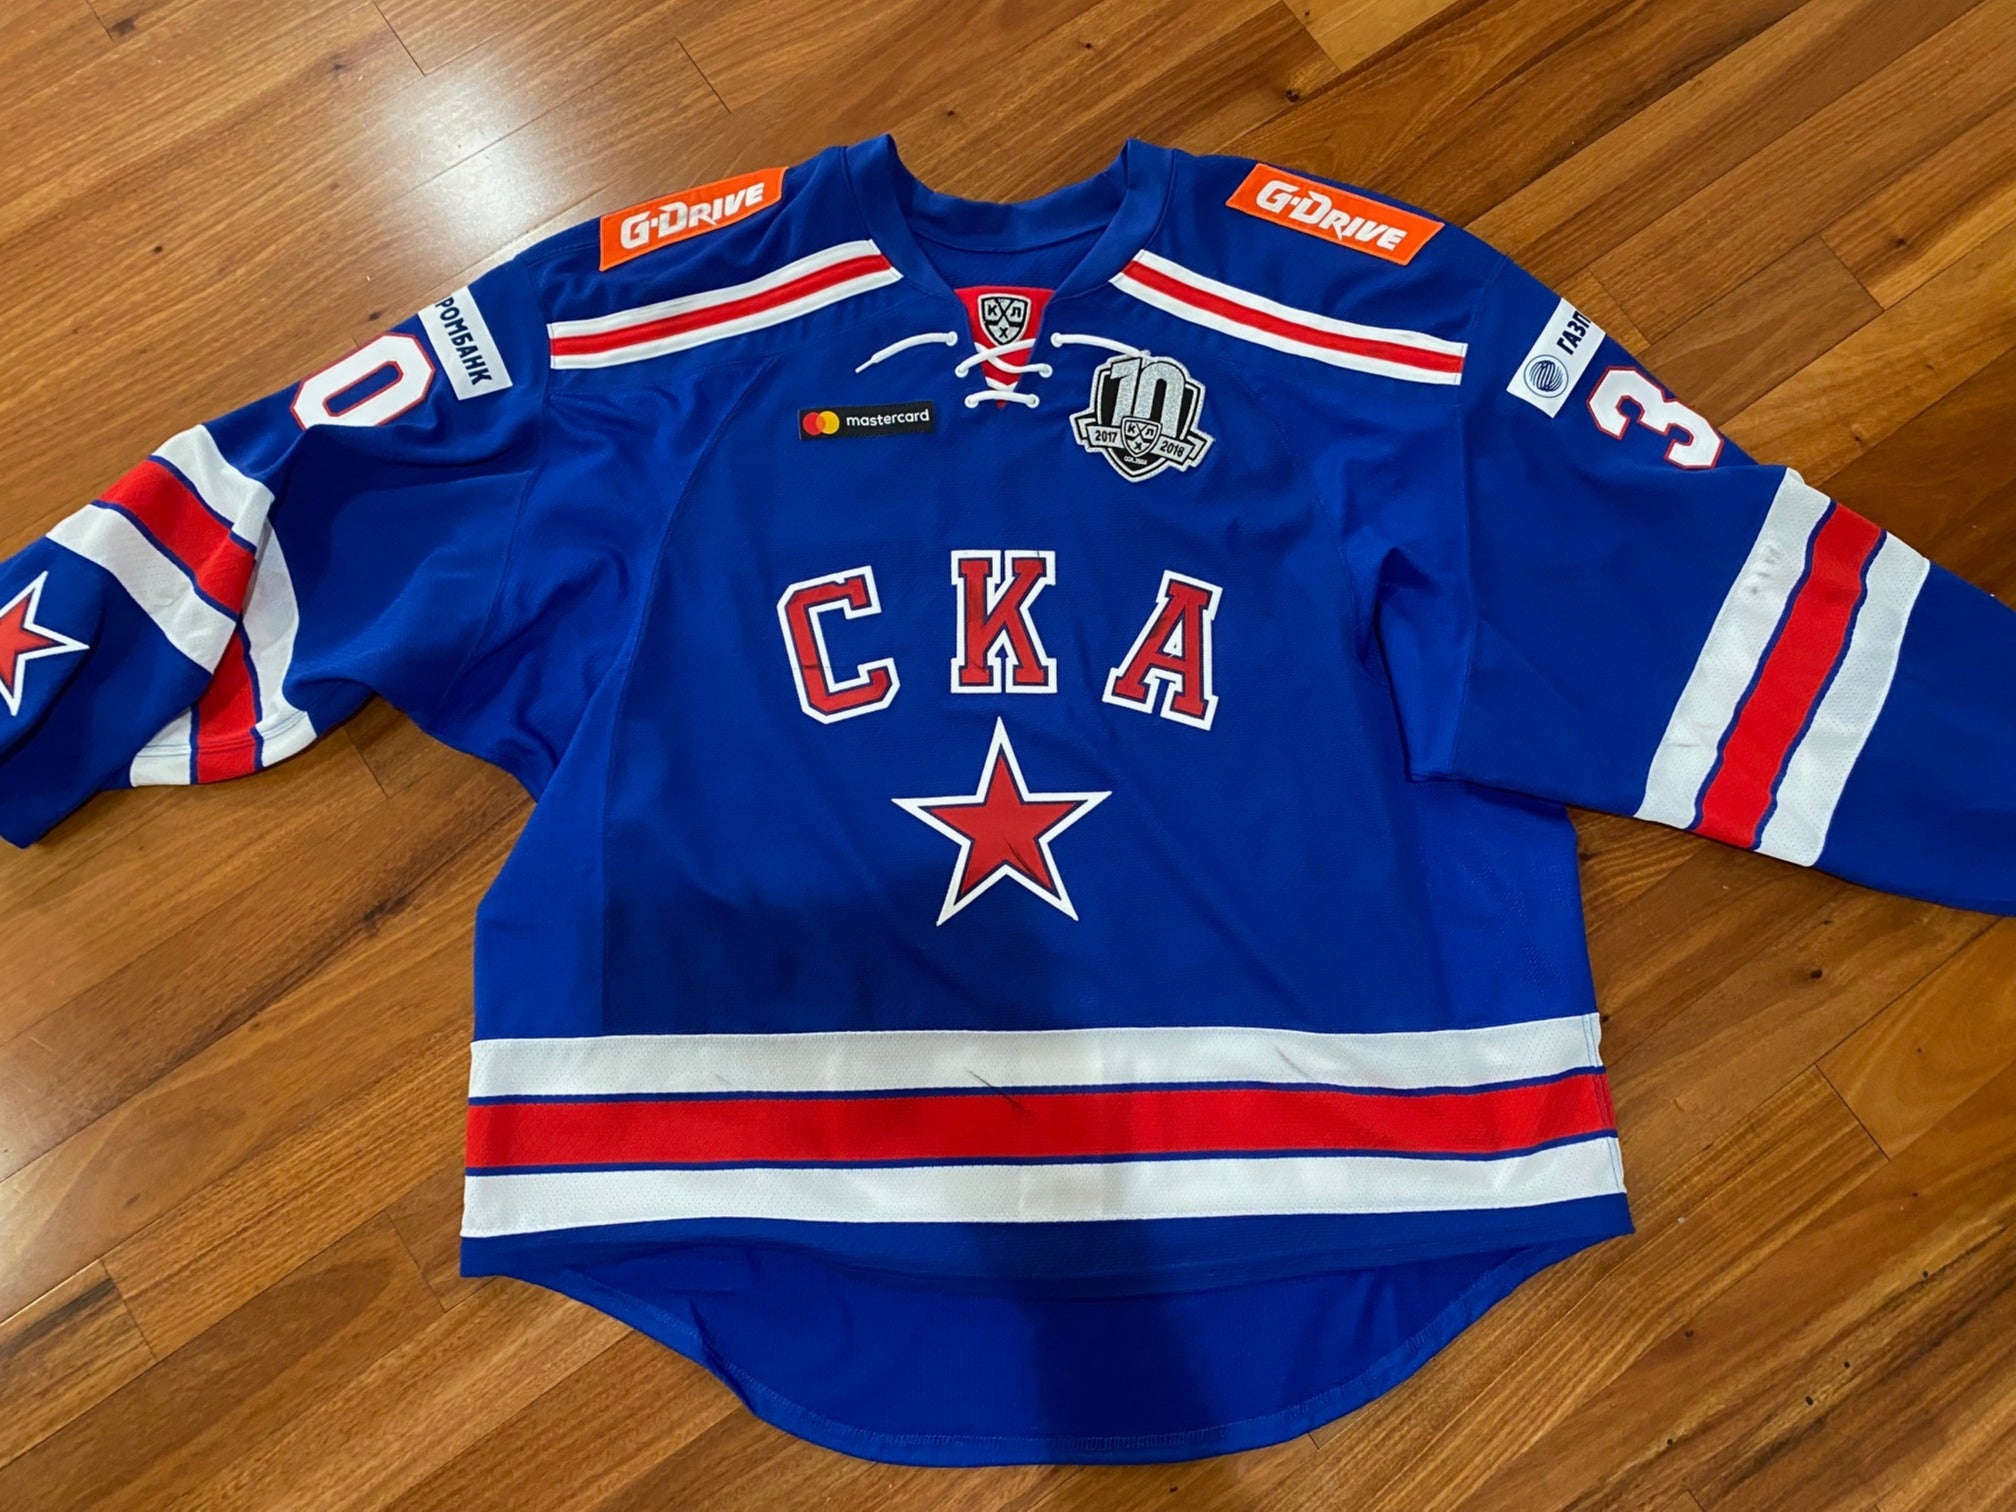 saltshaker91 posted to Instagram: New York Rangers hockey jersey